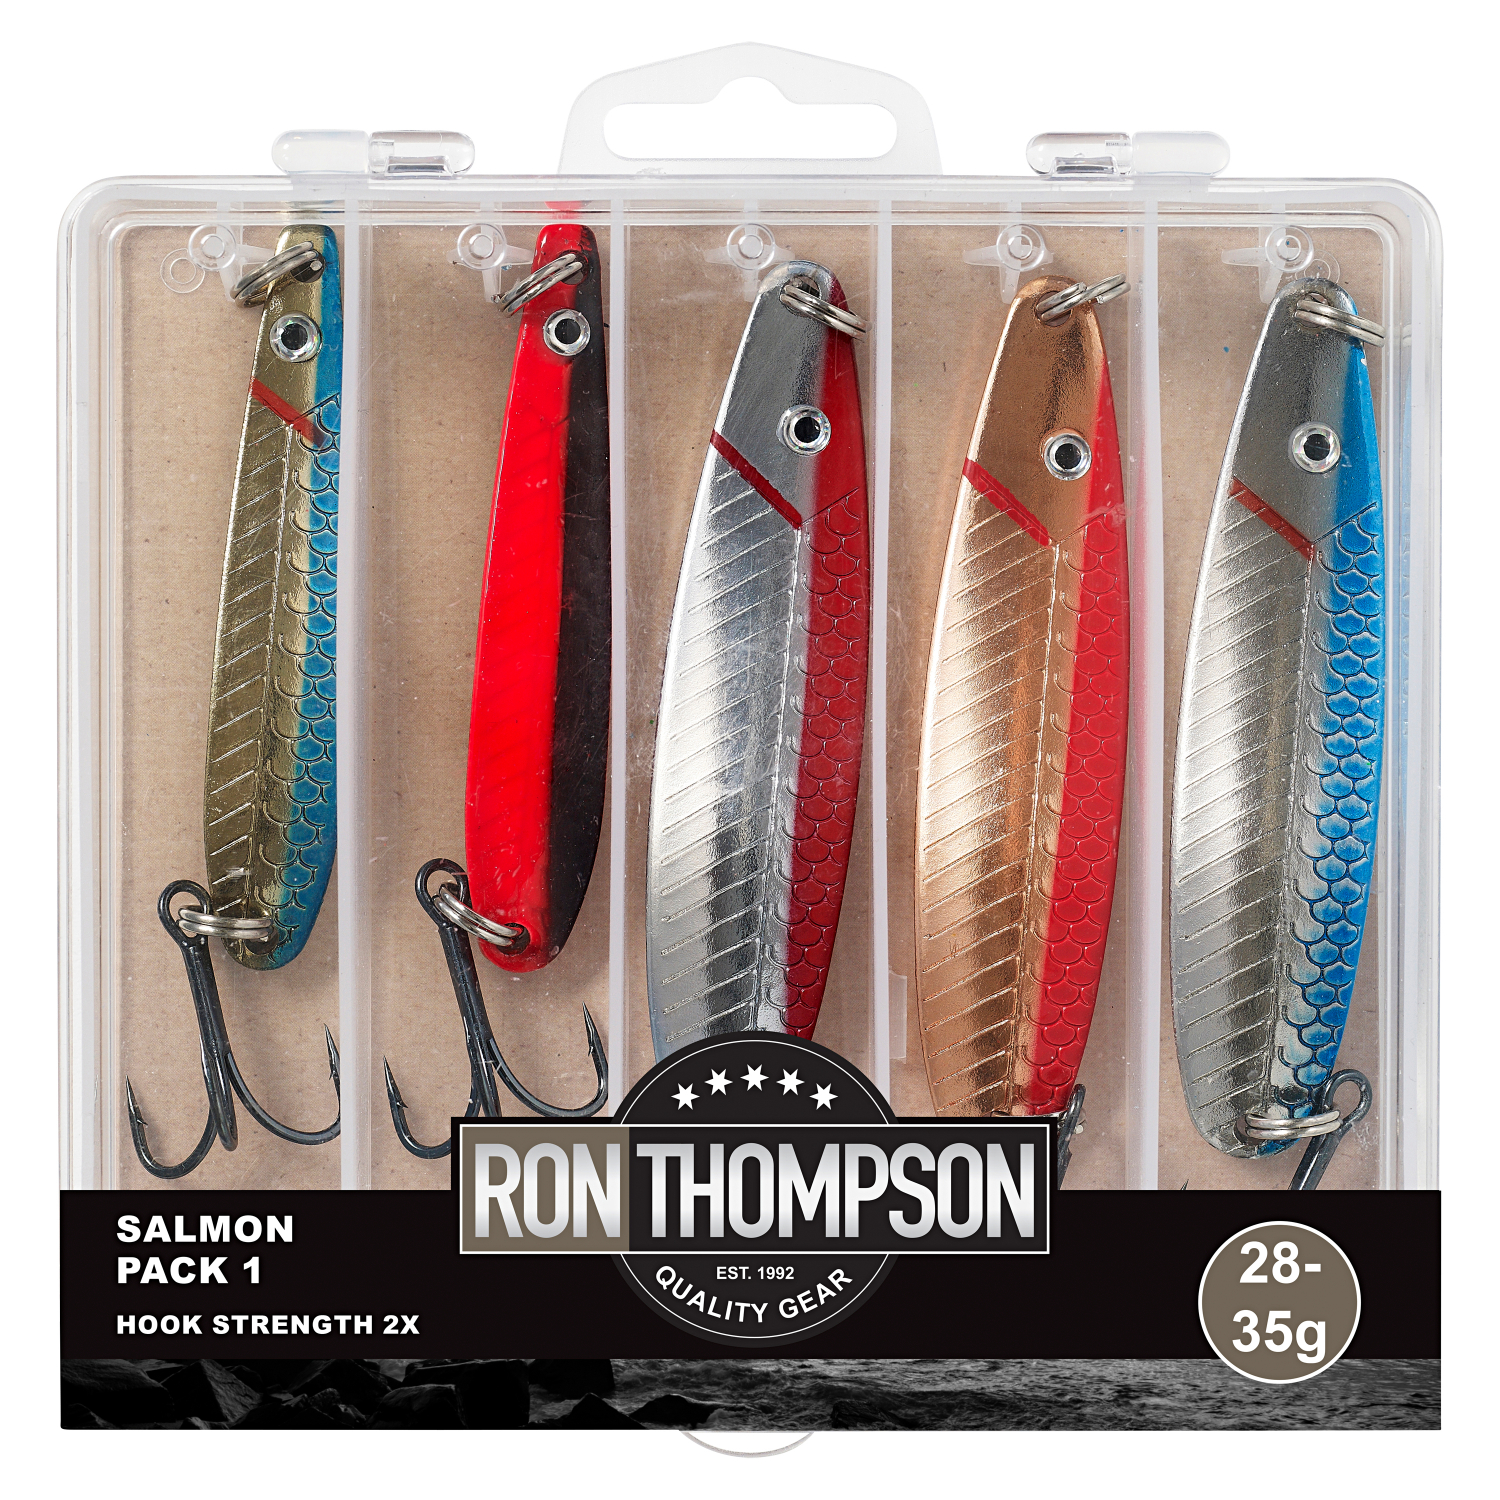 Ron Thompson Pirk Salmon Pack 